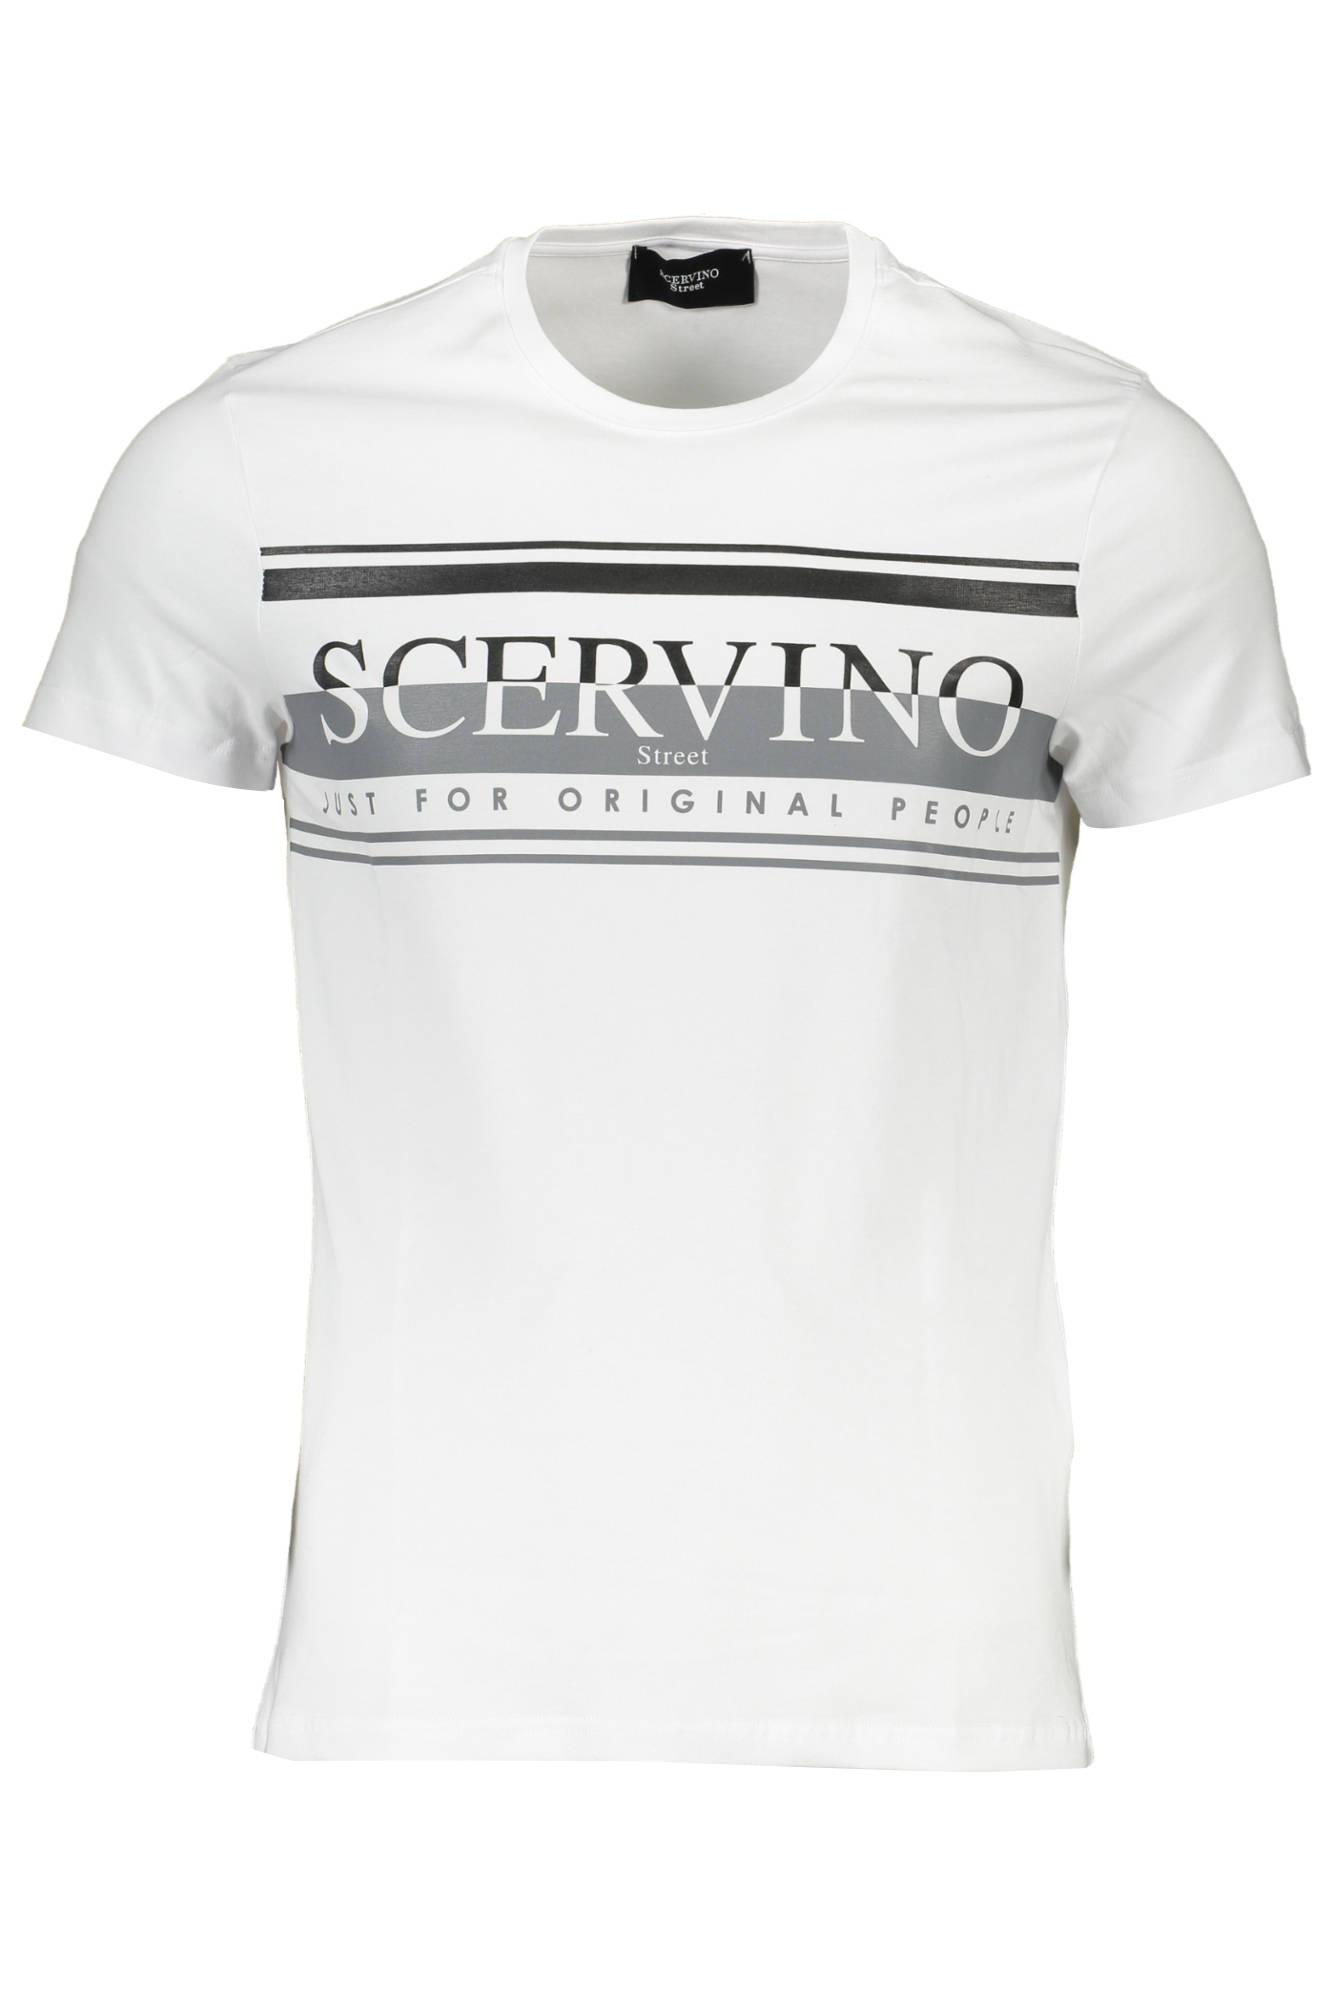 Tričko SCERVINO STREET tričko s krátkým rukávem BIANCO